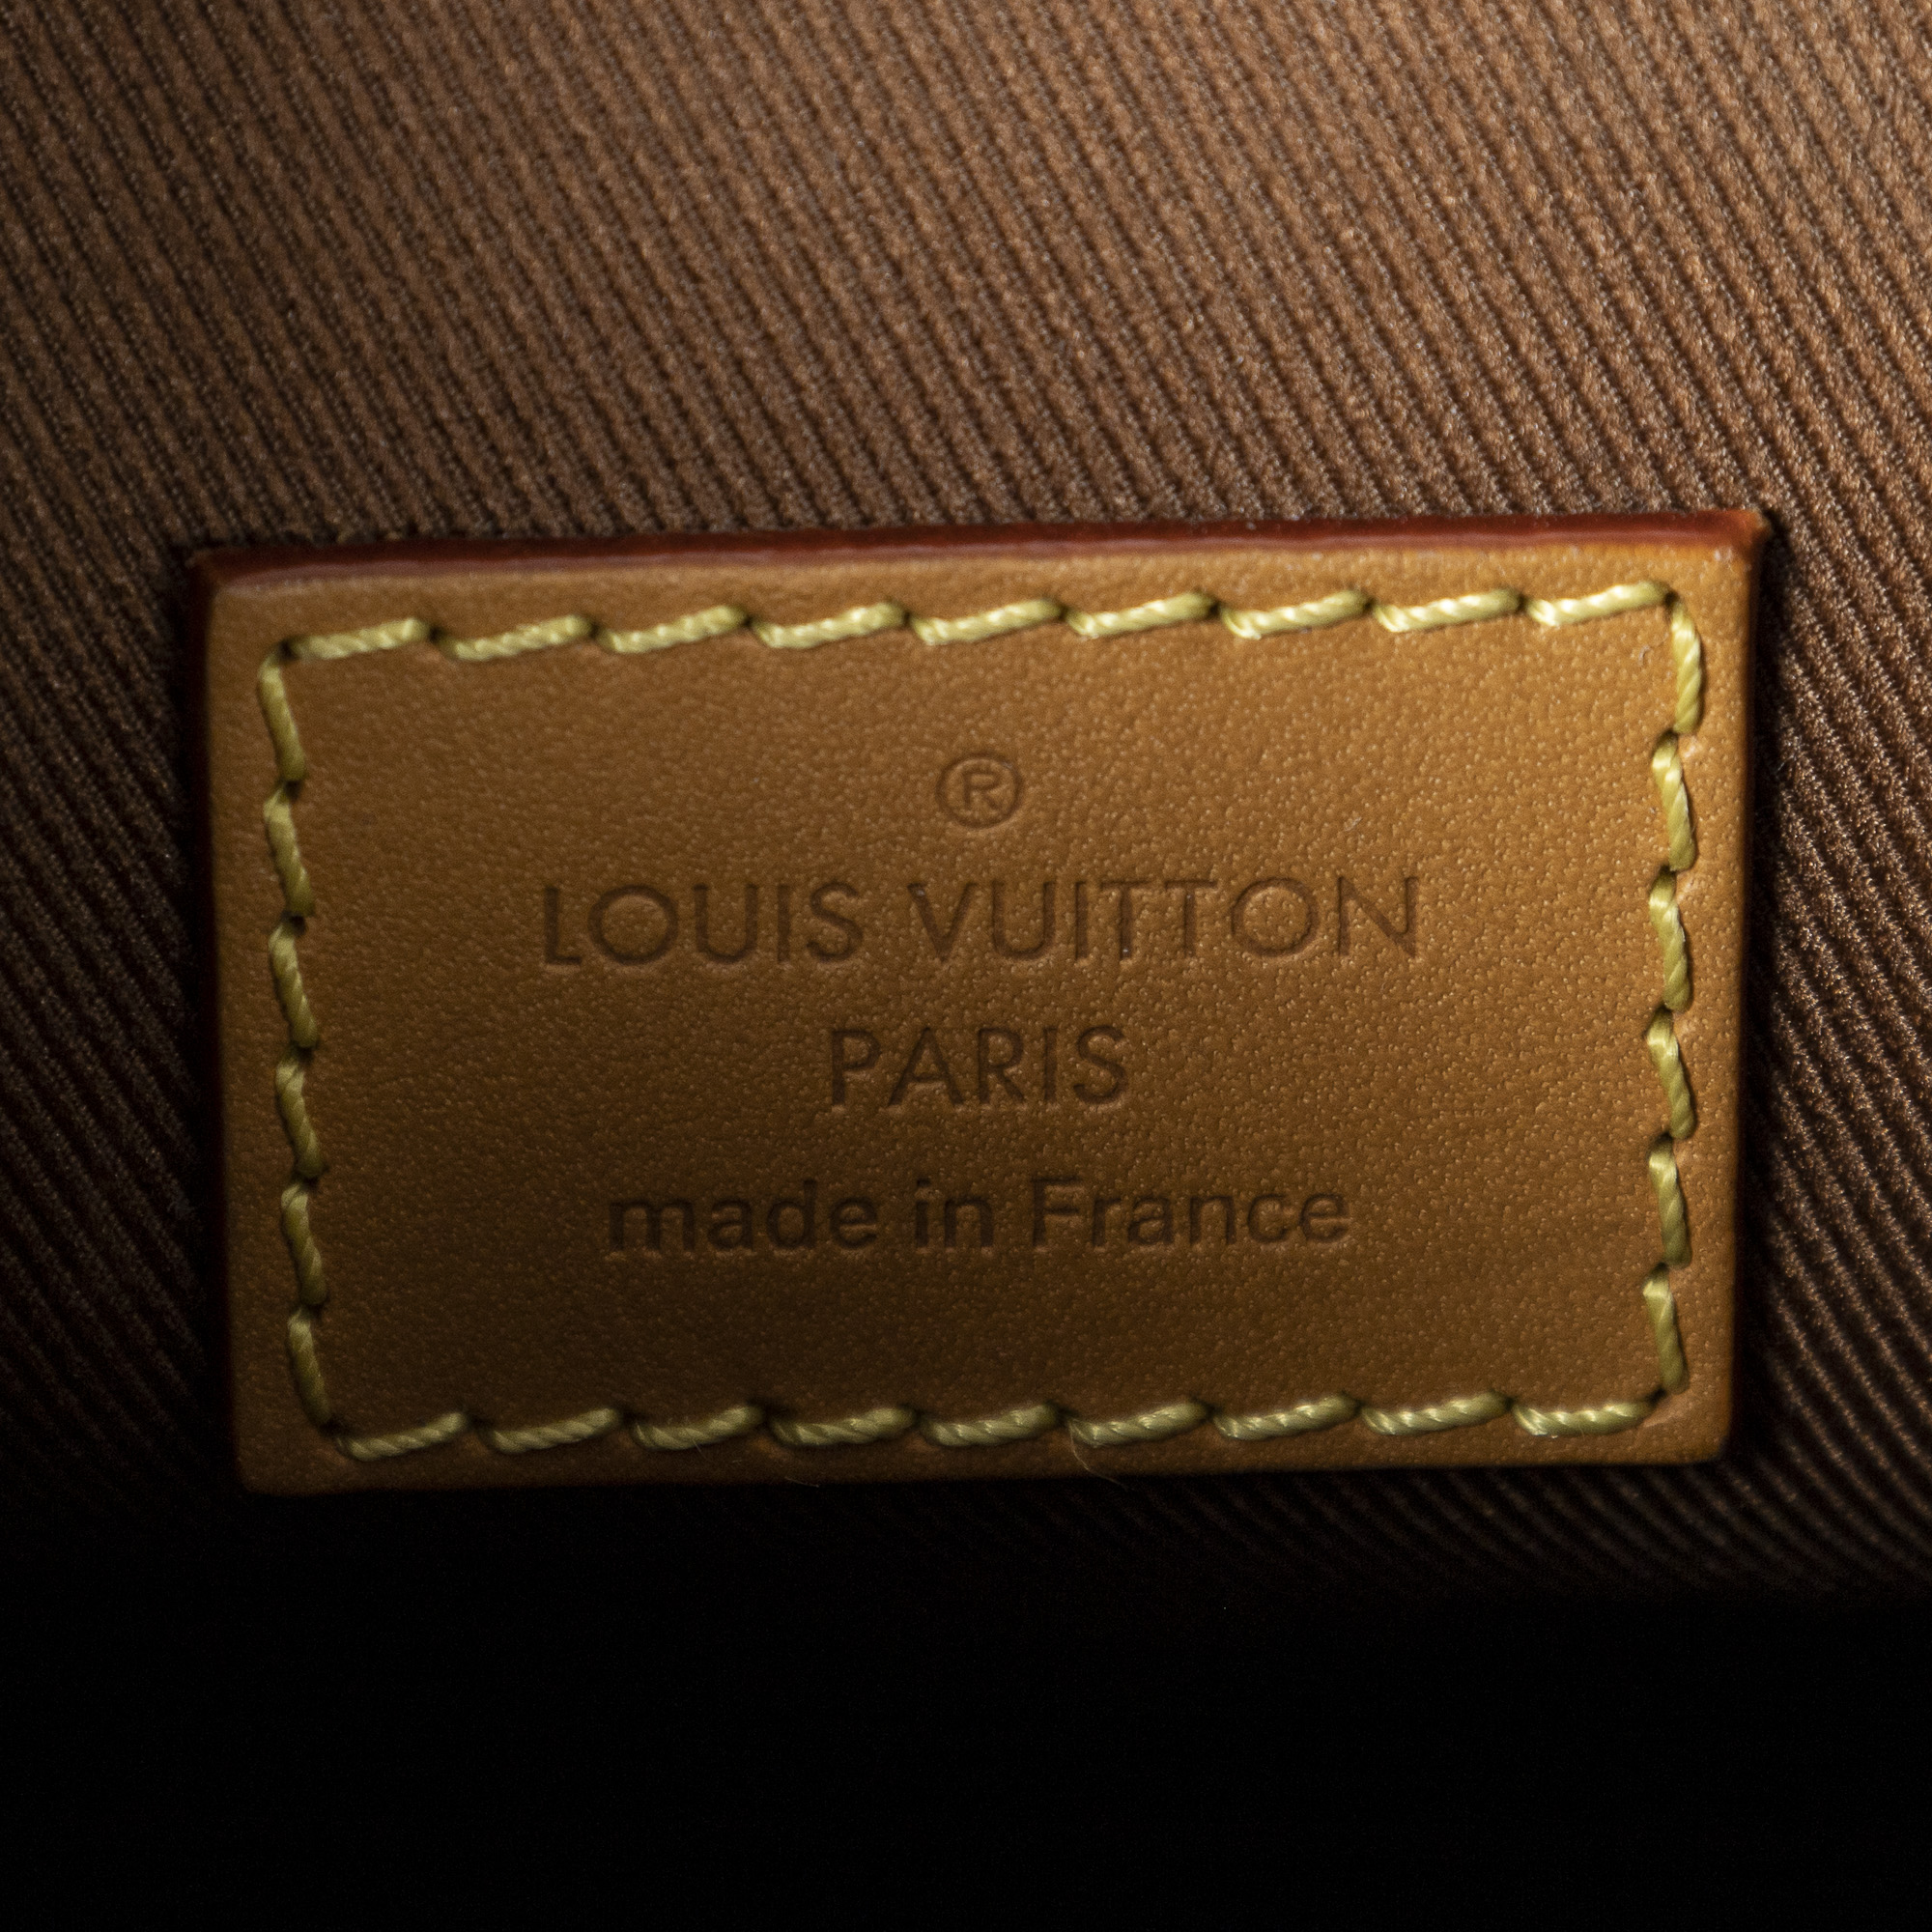 LOUIS VUITTON Legacy Milk Box Bag - More Than You Can Imagine